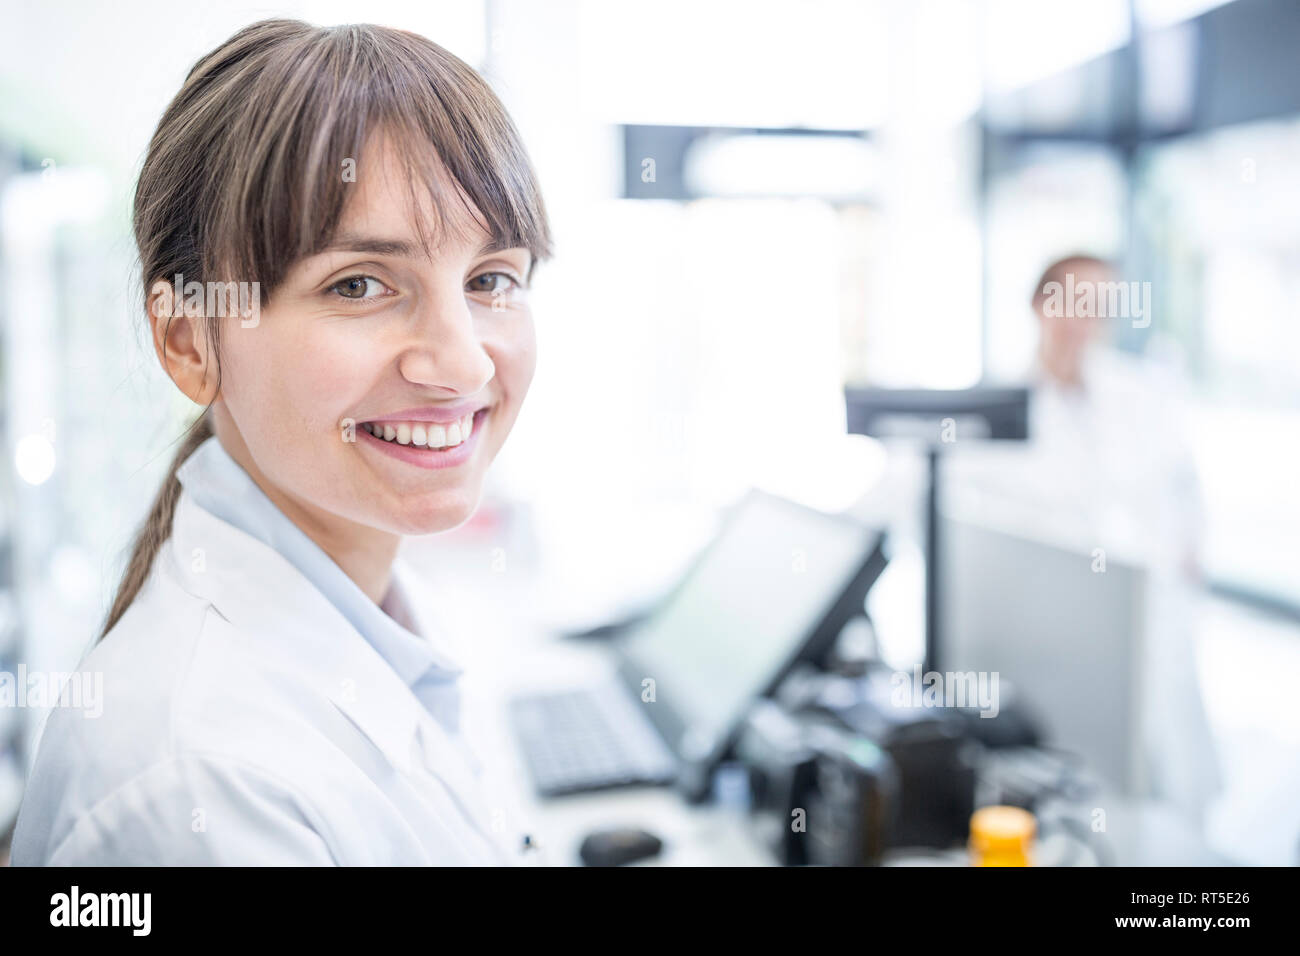 Portrait of smiling woman in lab coat Banque D'Images